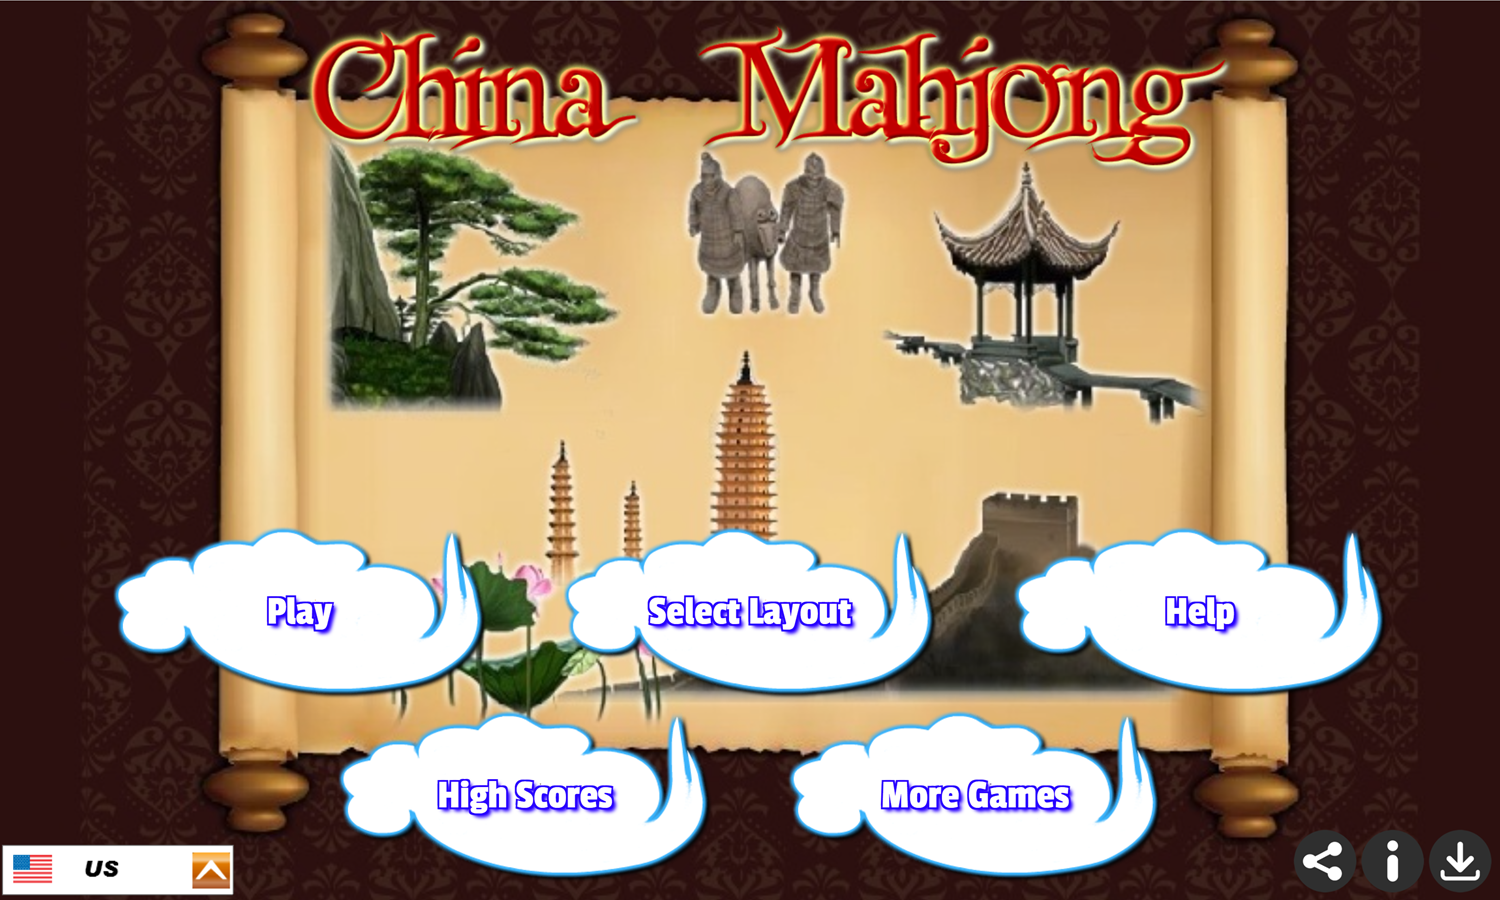 China Mahjong Game Welcome Screen Screenshot.